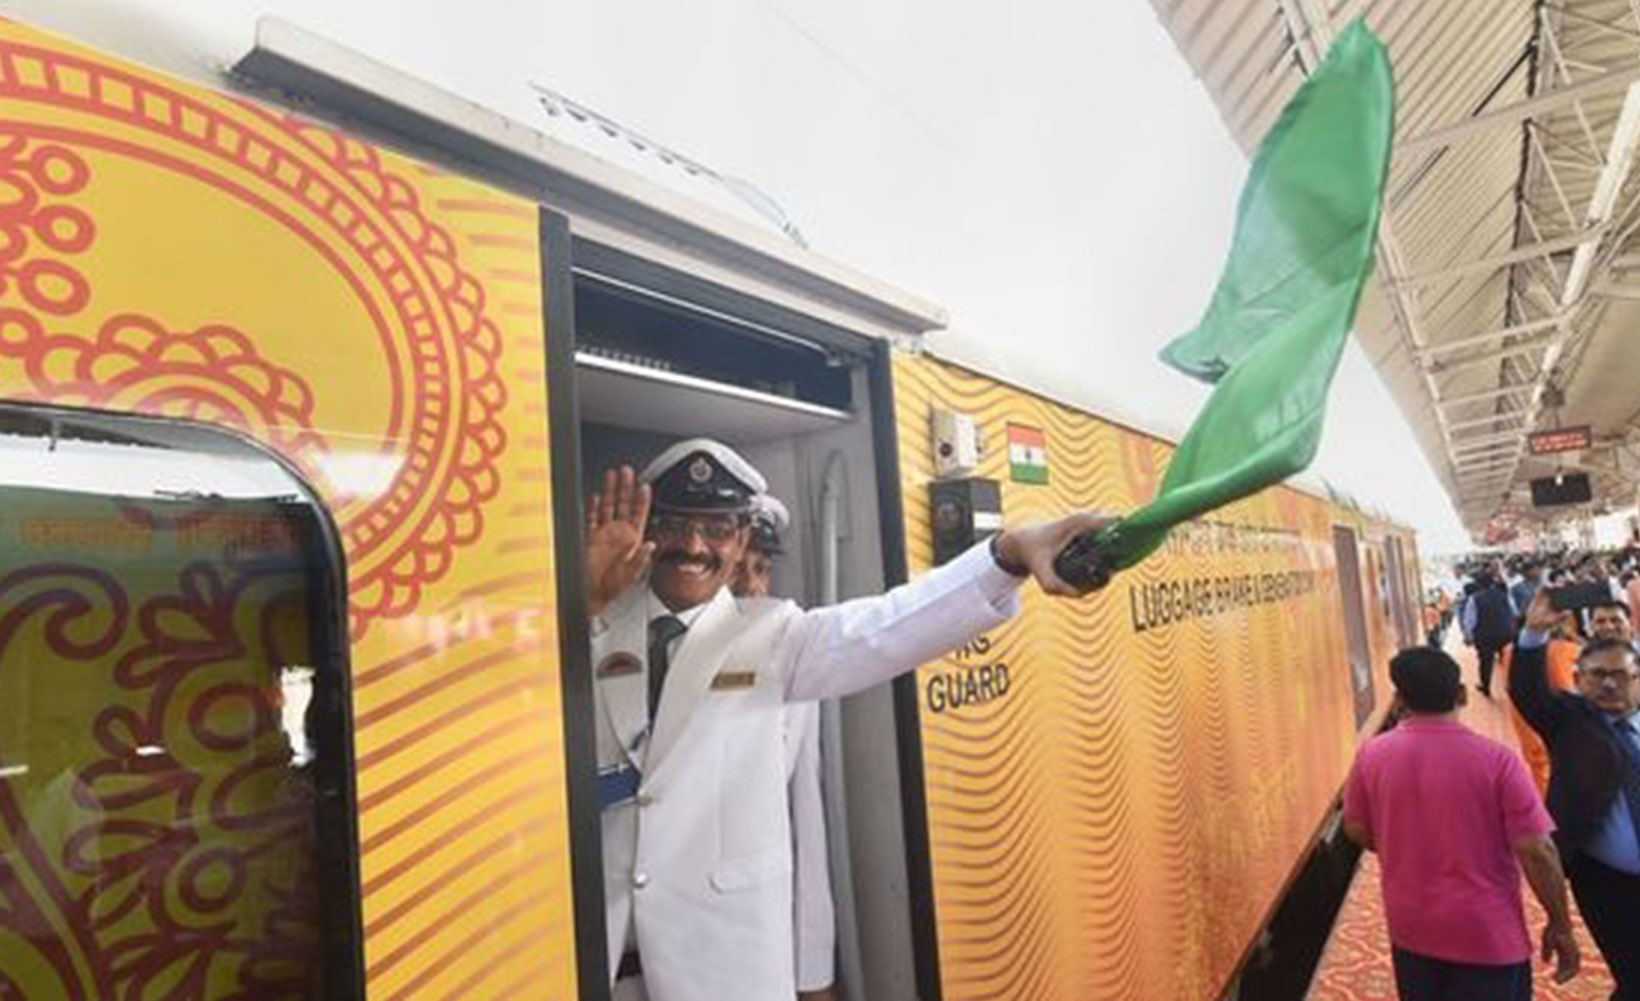 Tata, Adani, Hyundai queue up to run private trains on Indian Railways’ tracks